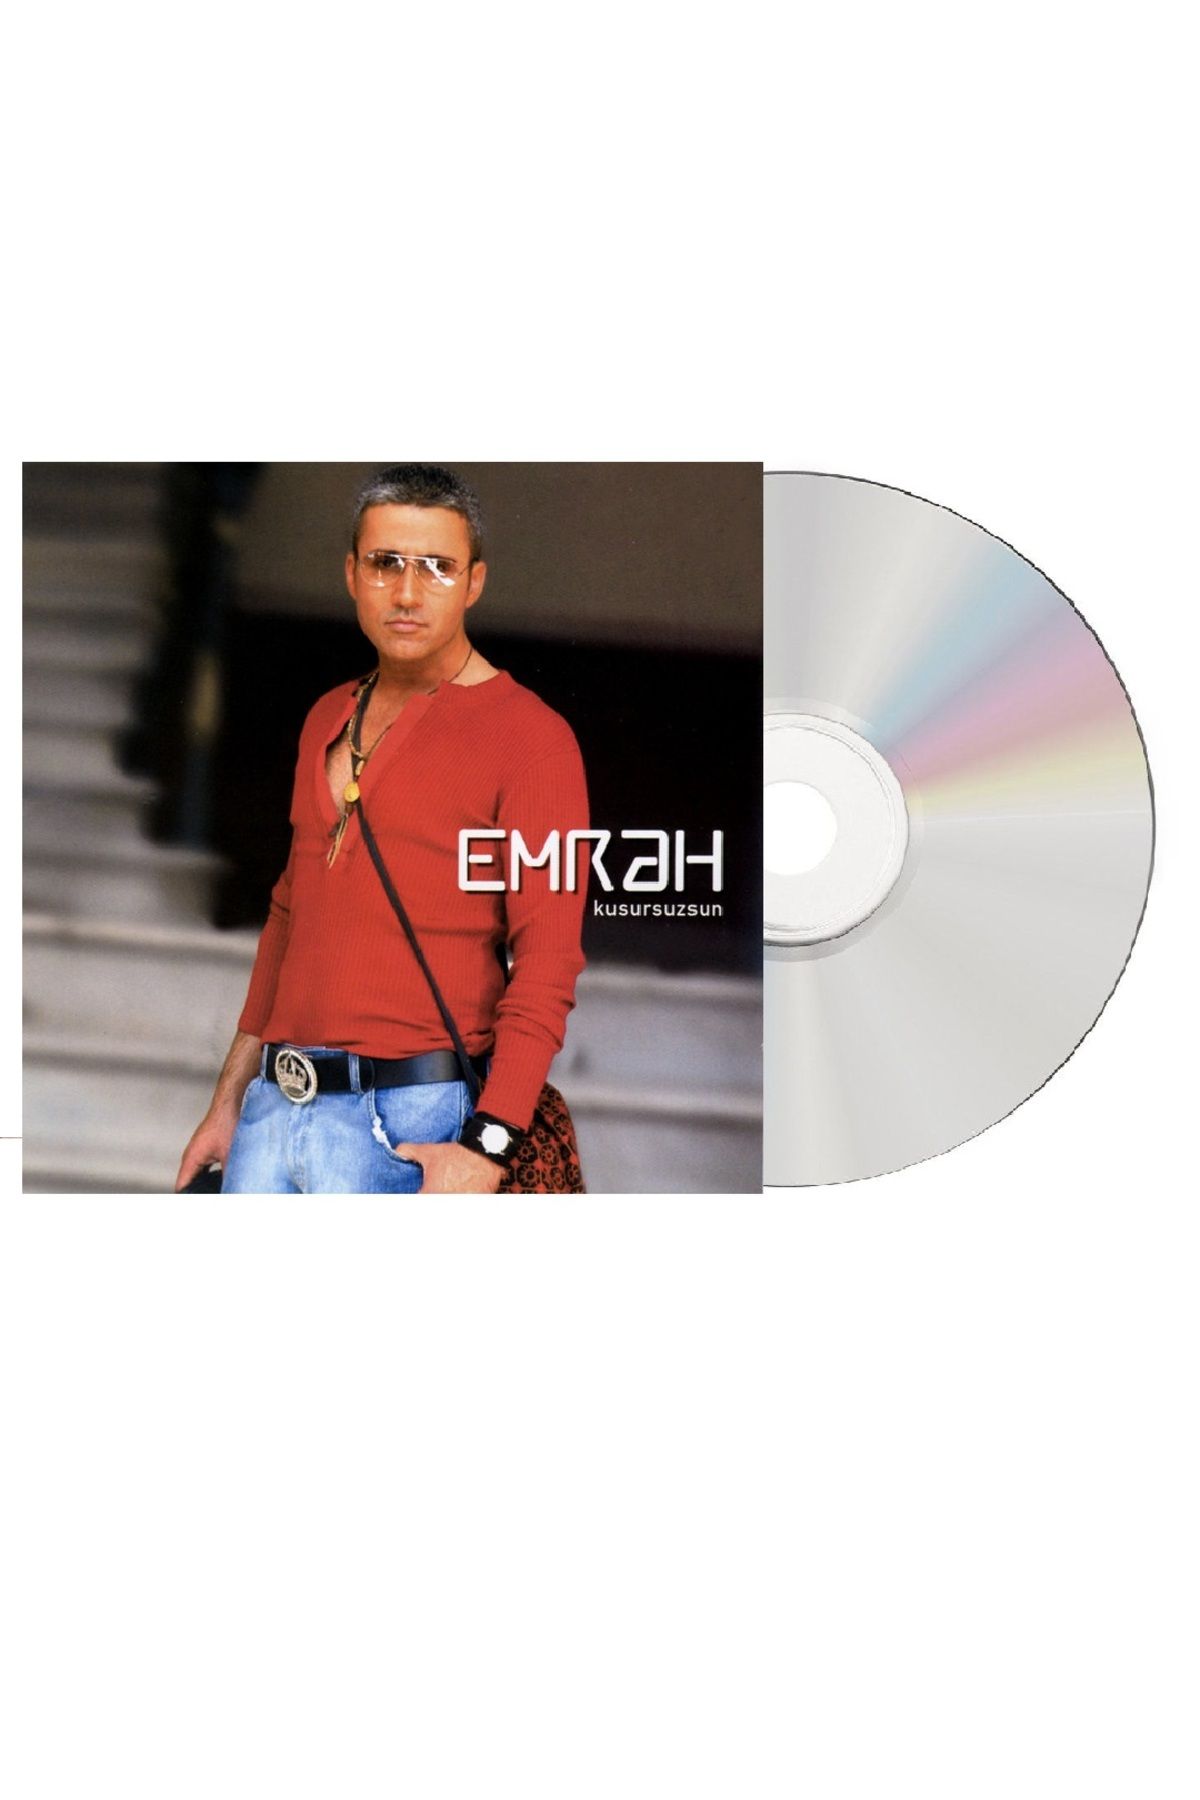 DMC Emrah - Kusursuzum - CD